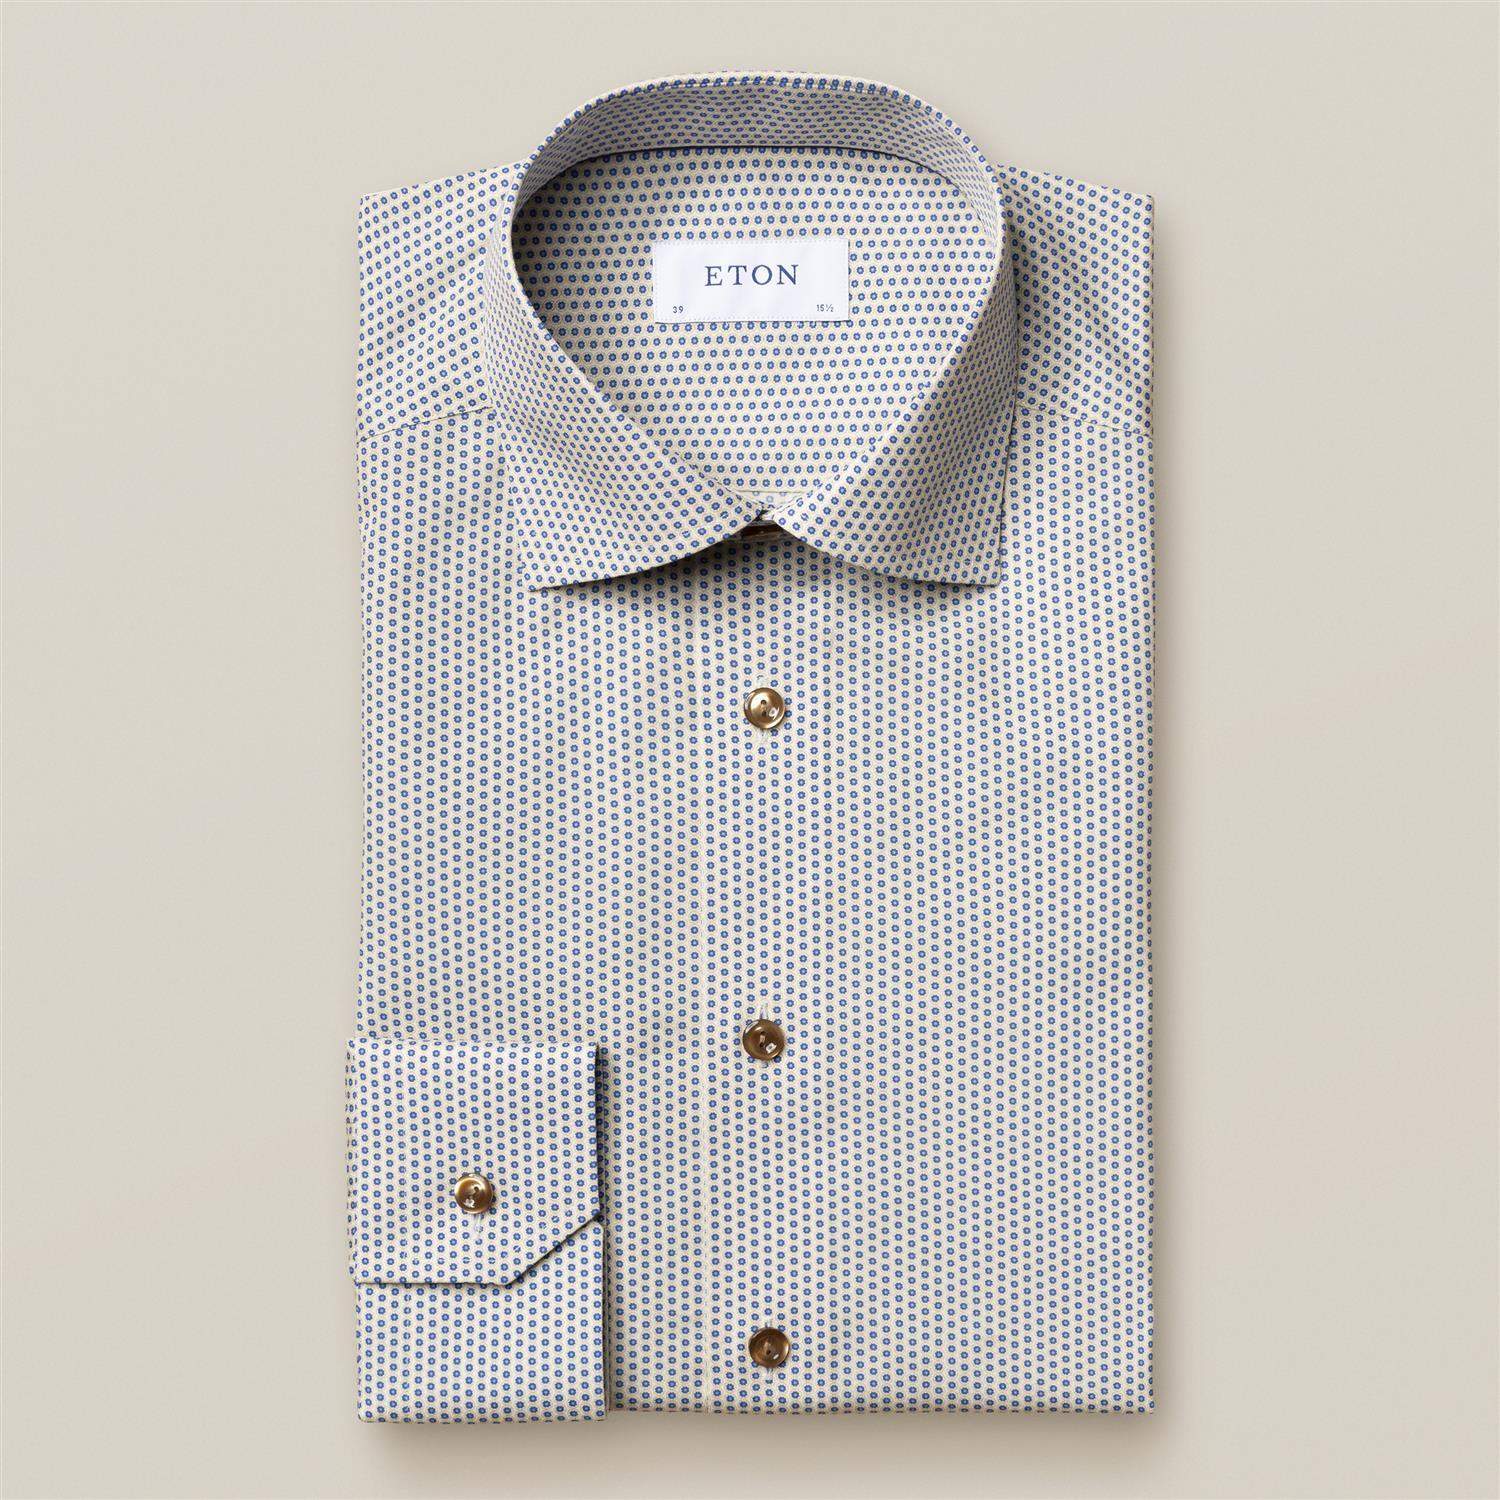 Slim Fit Skjorte Beige-Eton-100002026-Product.Number,2102,43 Beige-Product.Variant,5661212-ProductId,Beige,eton,Herre,Penskjorter